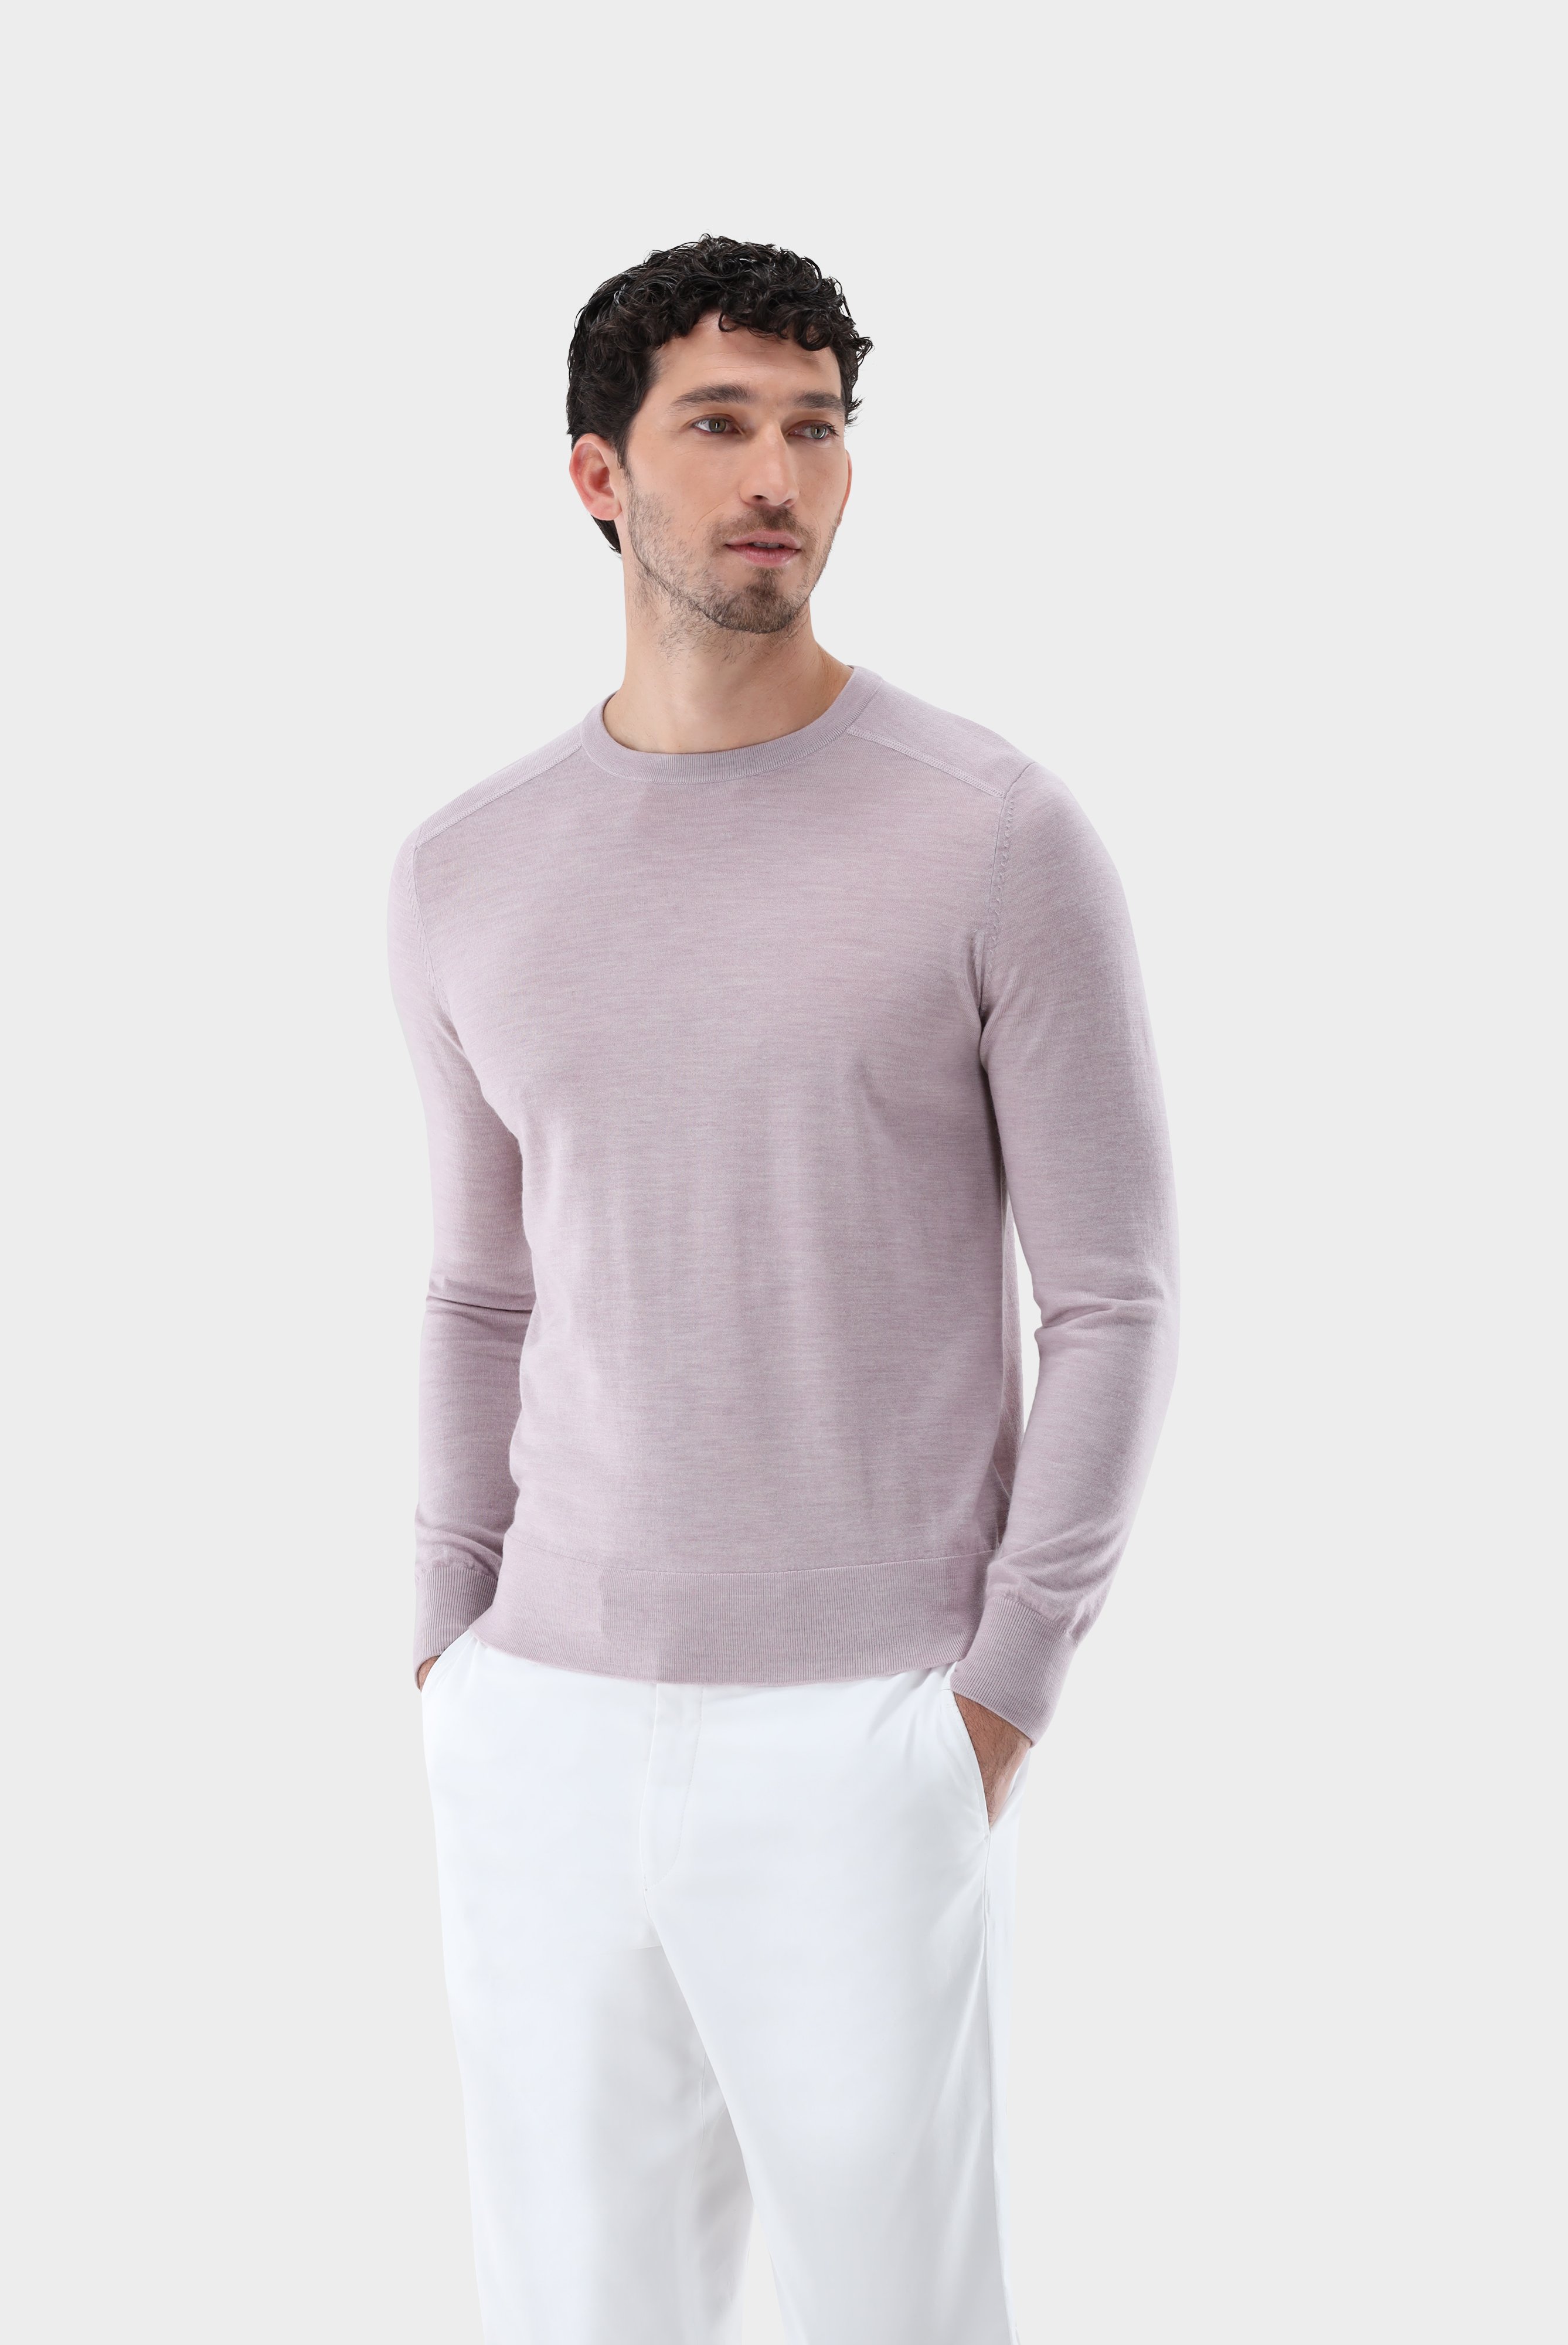 Sweaters & Cardigans+Crewneck in Ultrafine Merino Wool+82.8649.4M.S00173.610.S